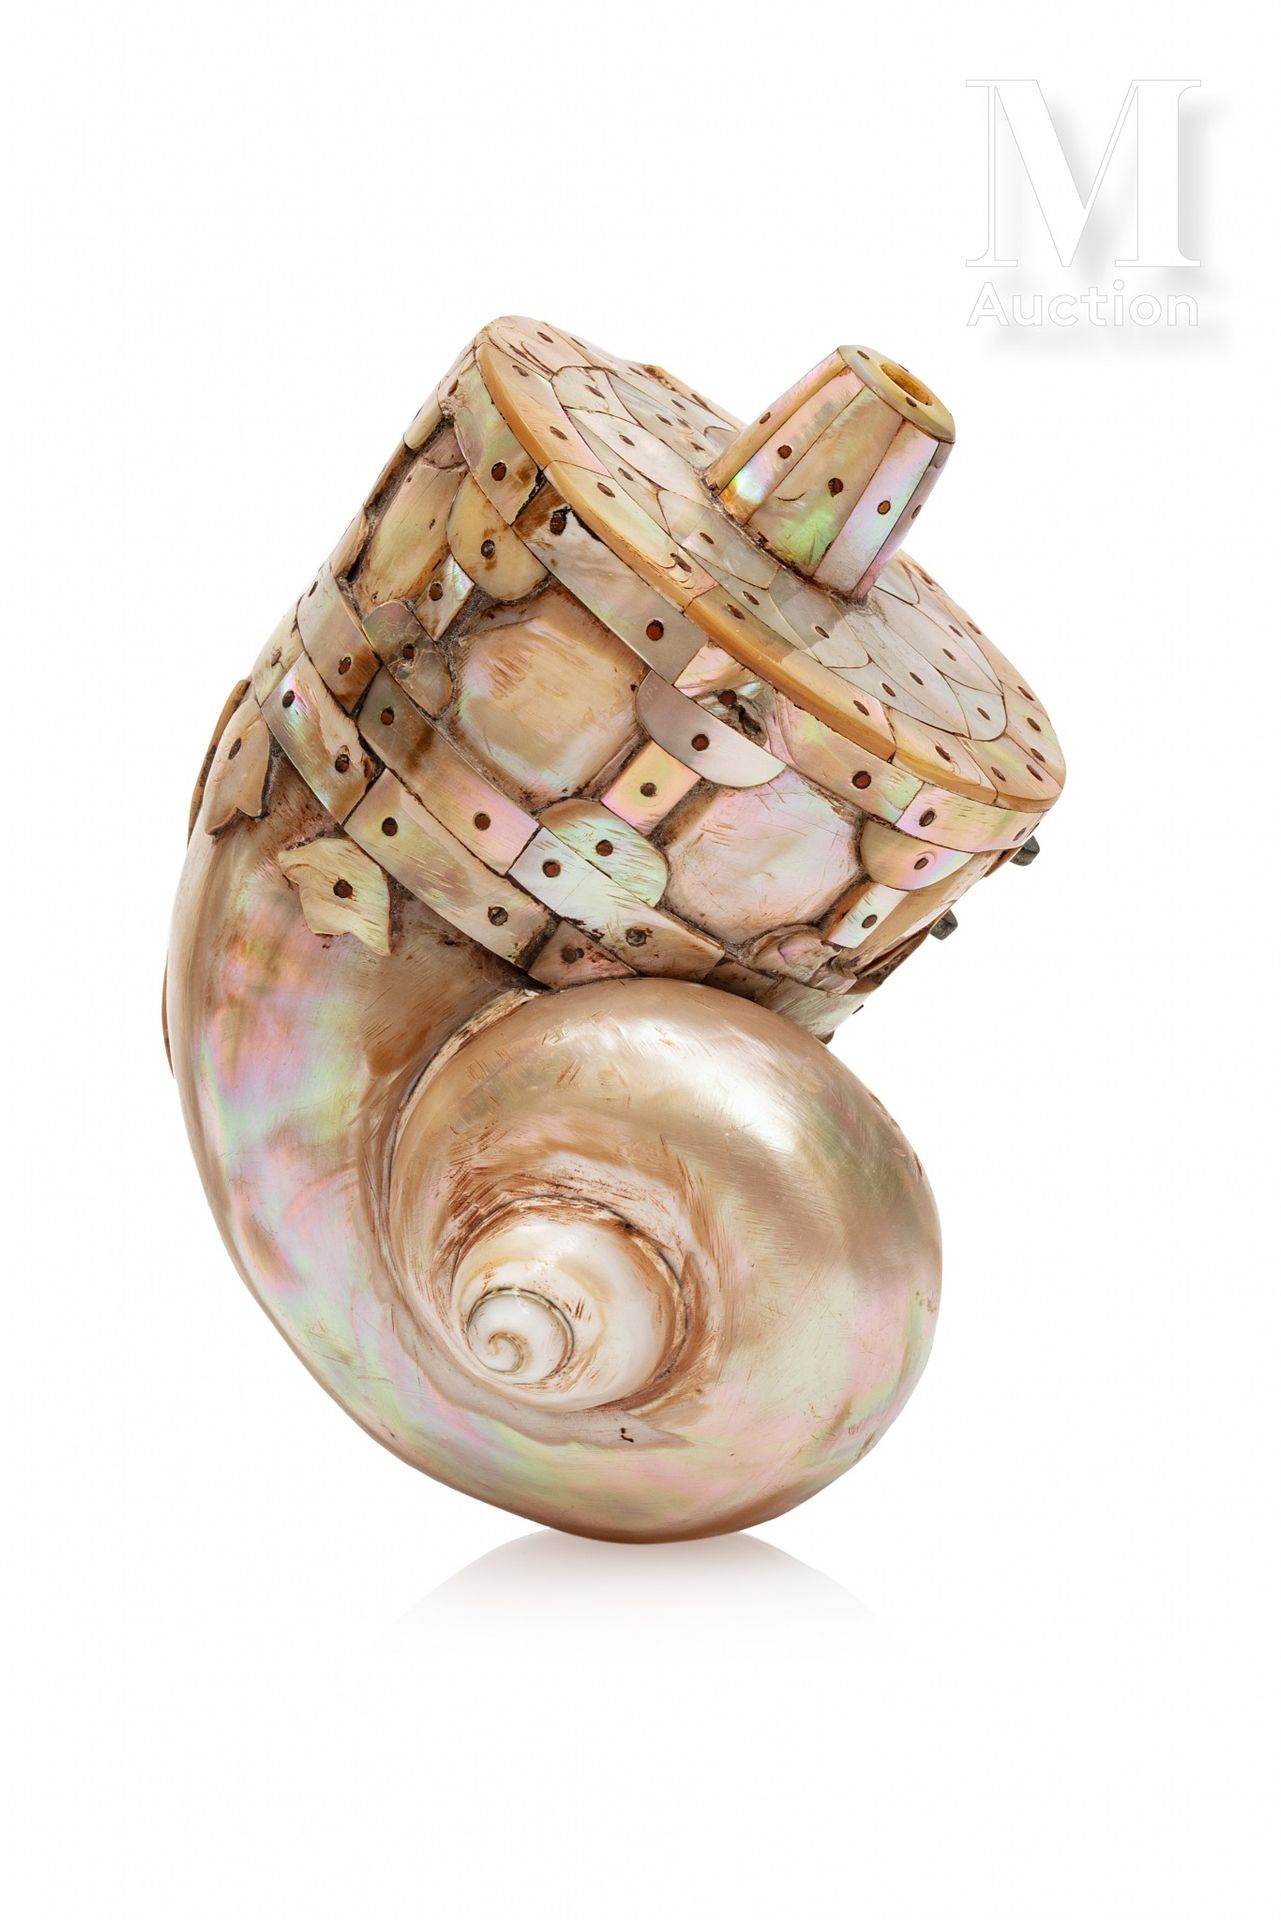 Poire à poudre indo-portugaise 印度，古吉拉特邦，18世纪

由一个海螺形成，上面装饰着珍珠母板，用小铜钉固定，有些是芙蓉或护身符&hellip;